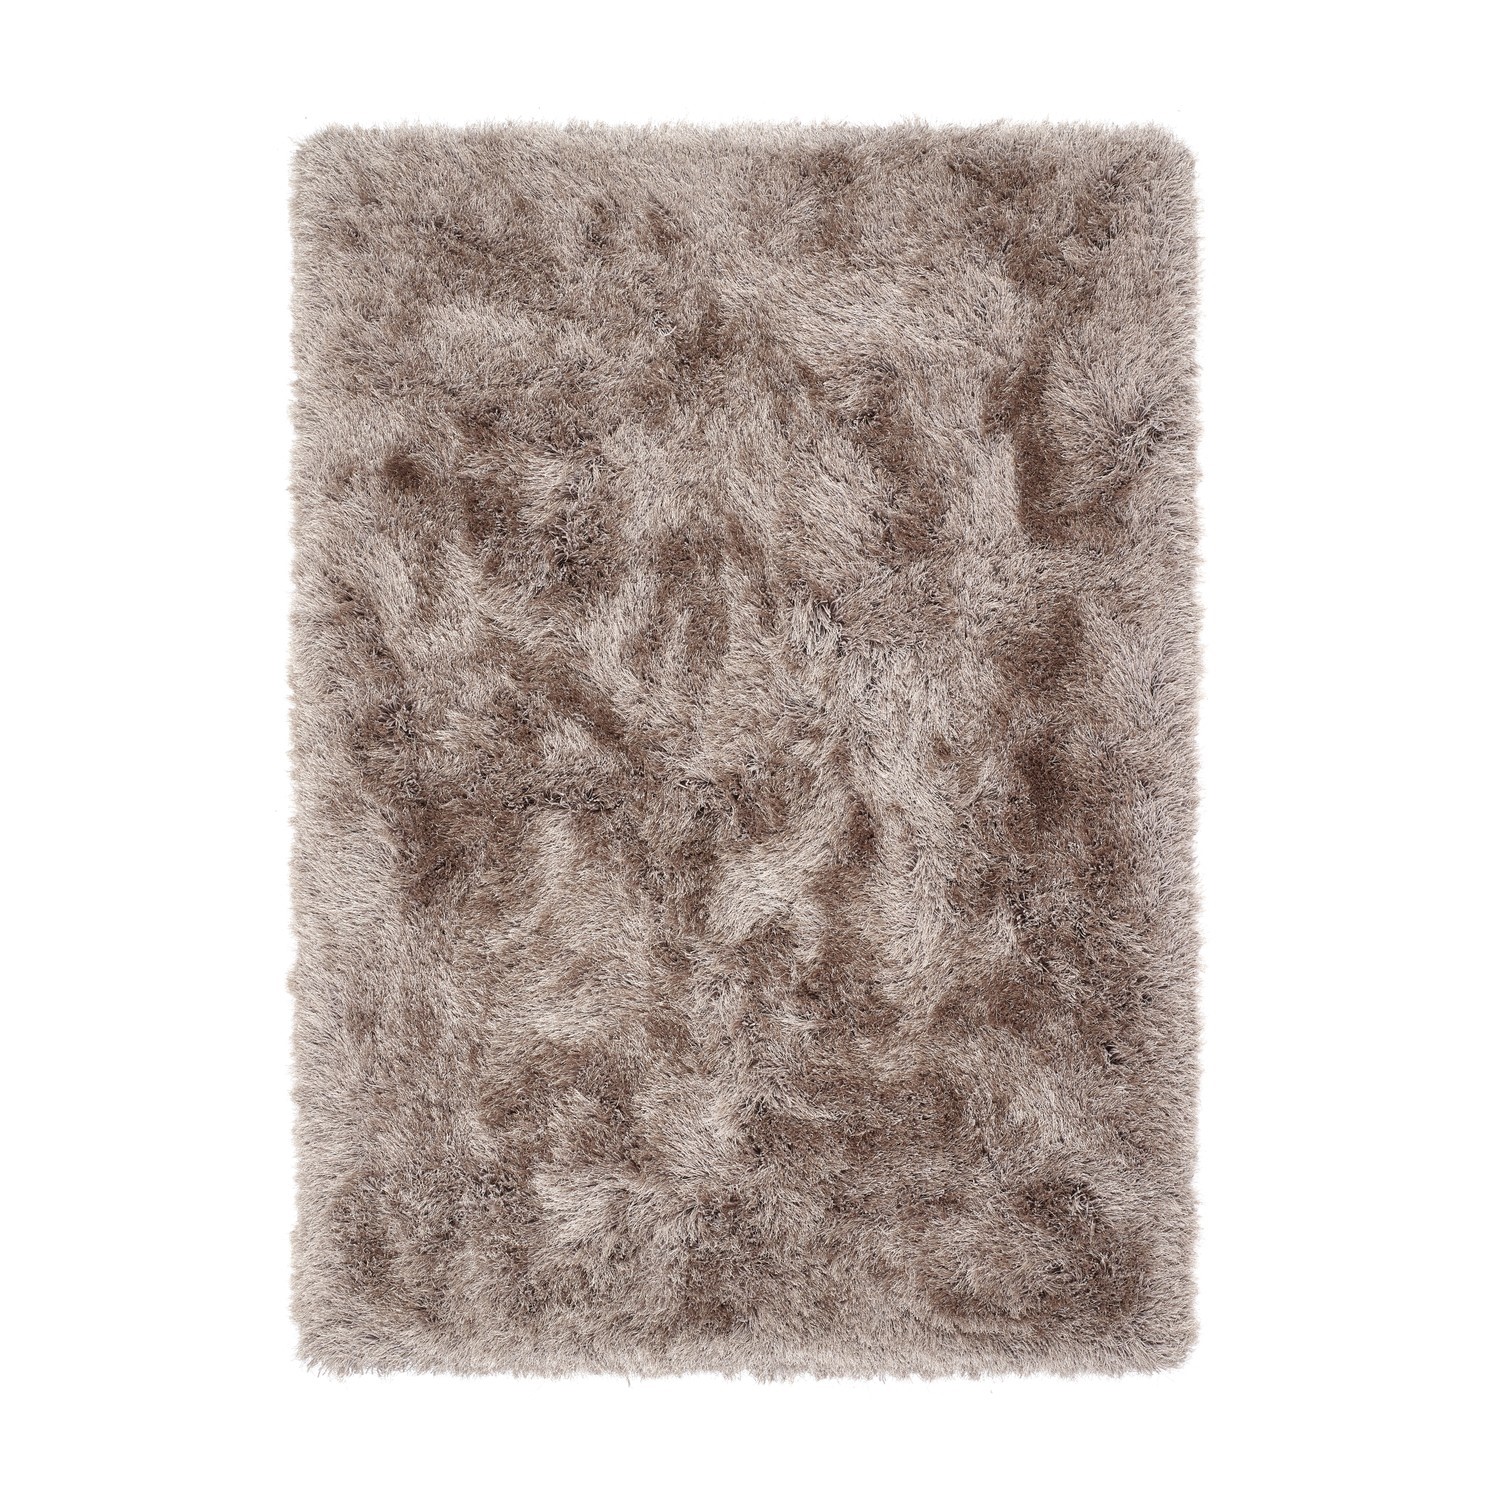 Photo of Ripley extravagance shaggy mink rug - 230x160cm